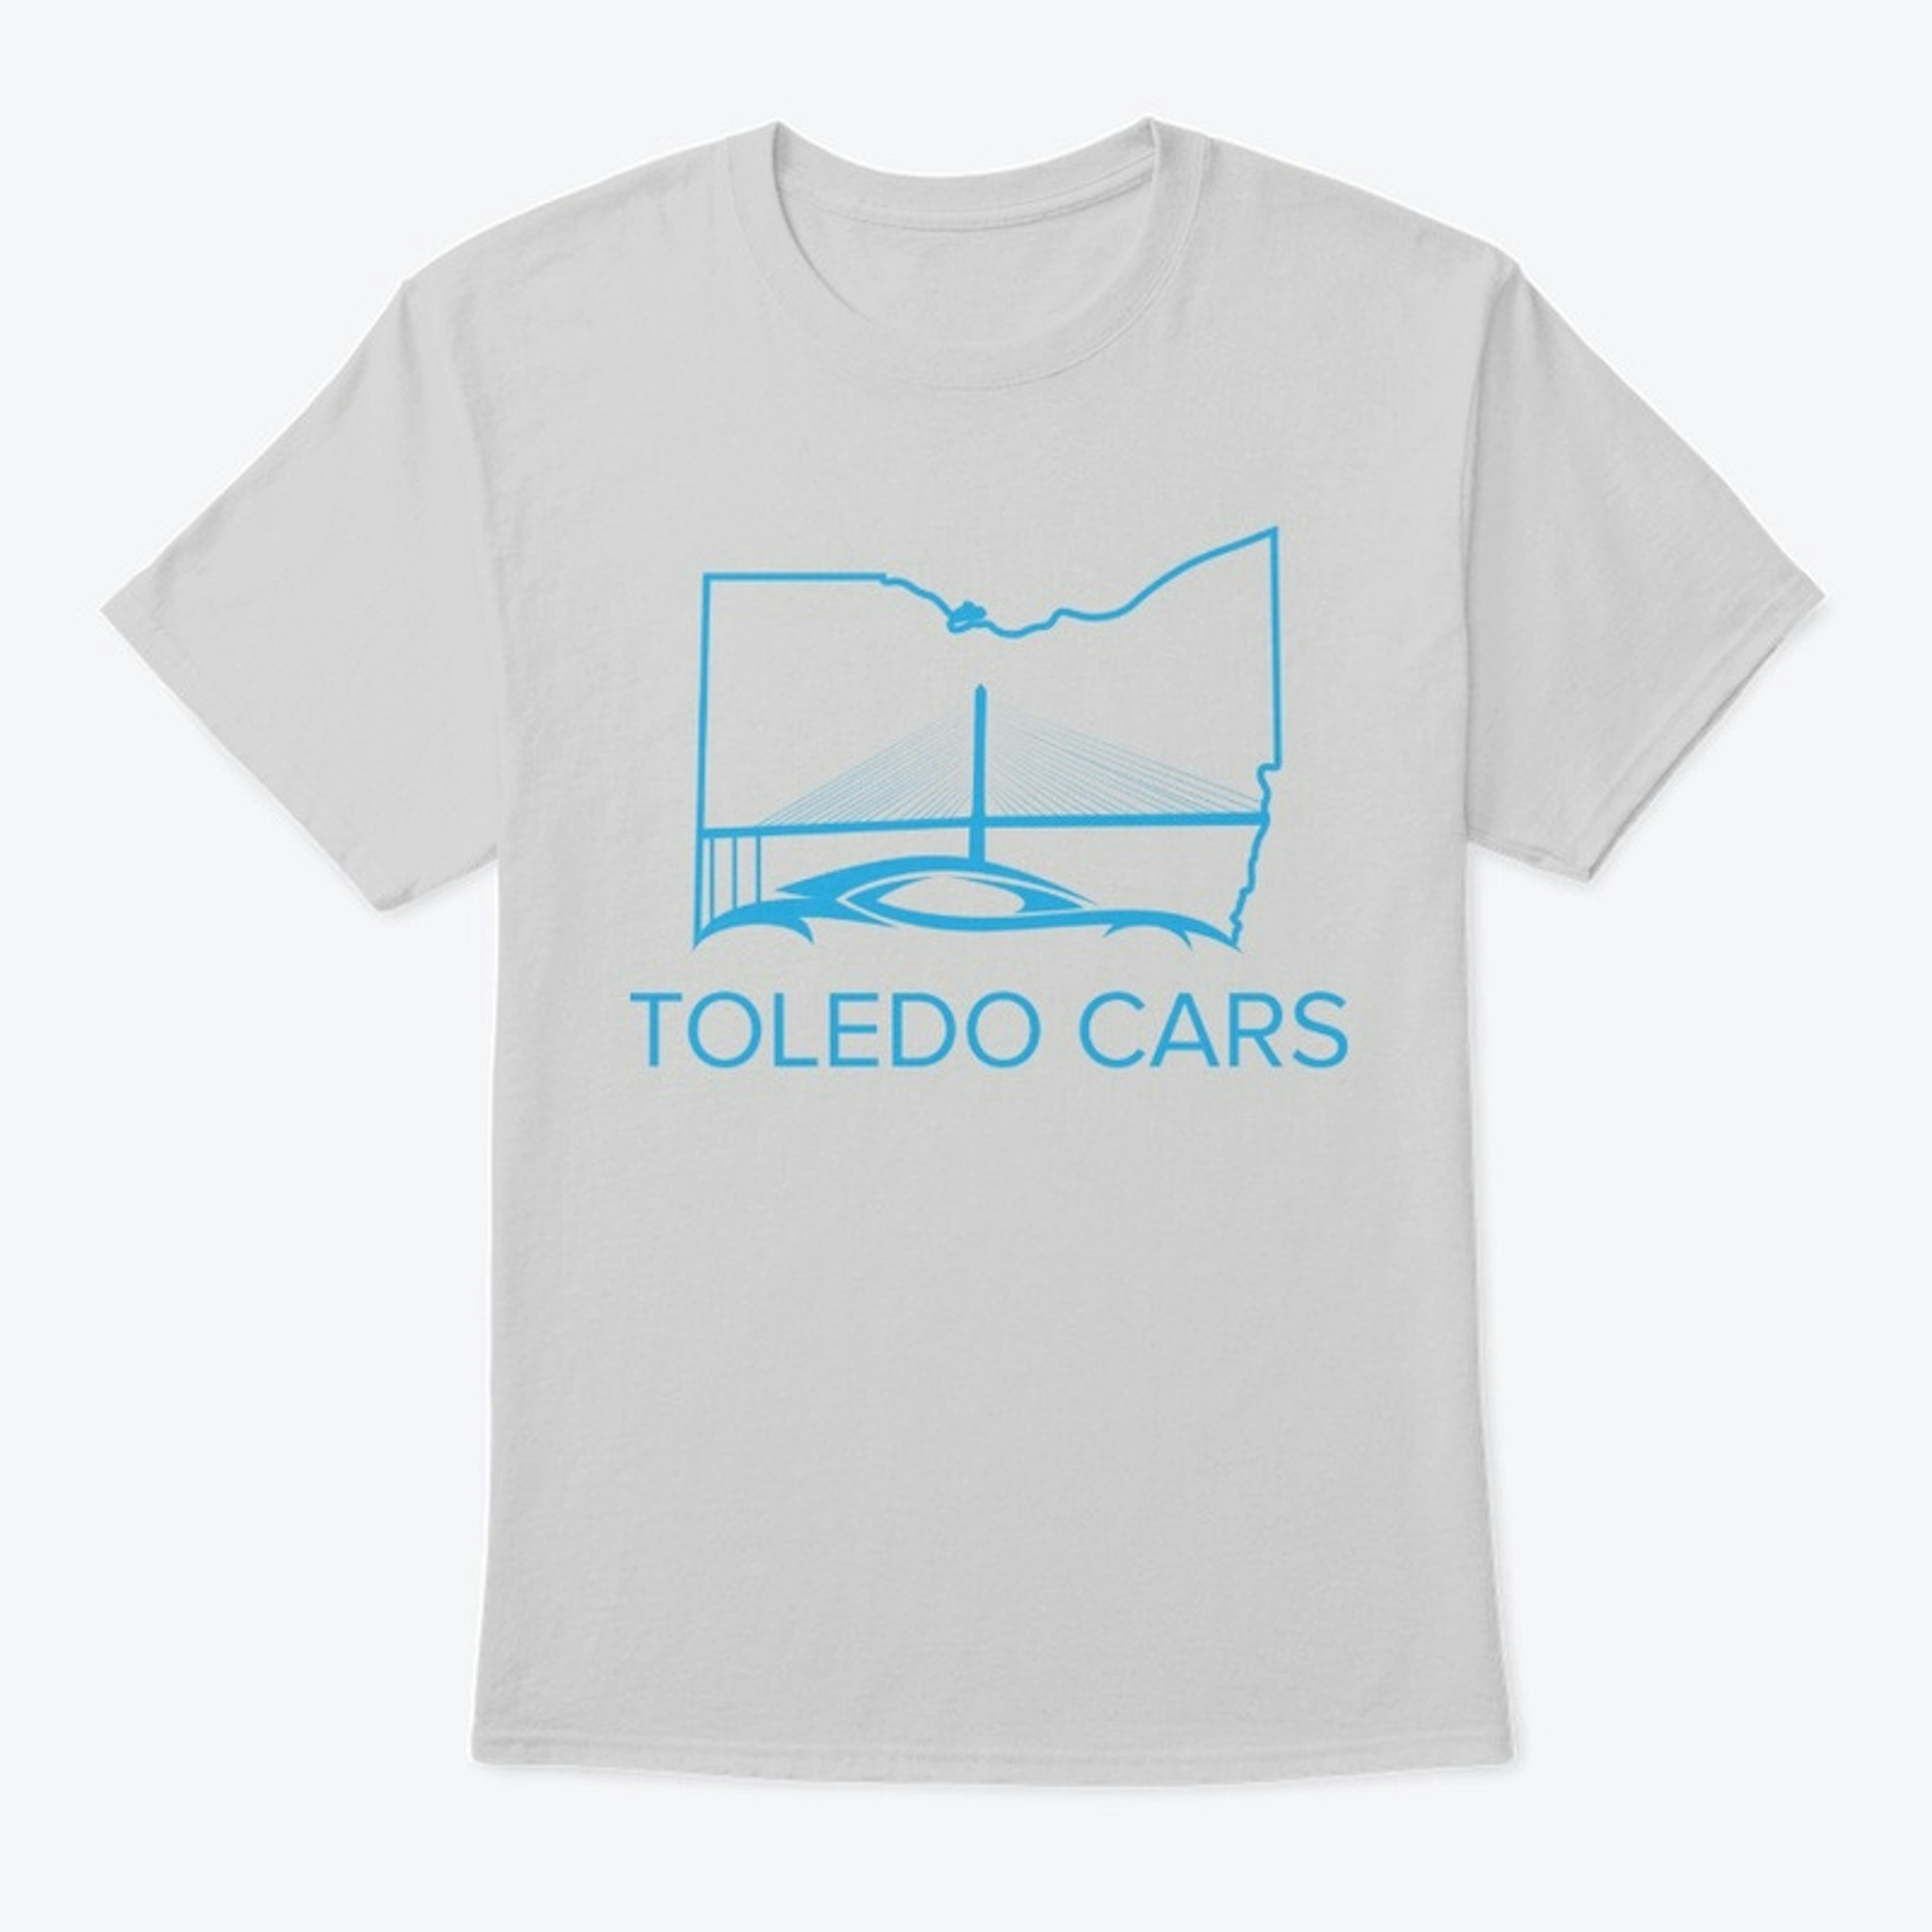 Toledo Cars